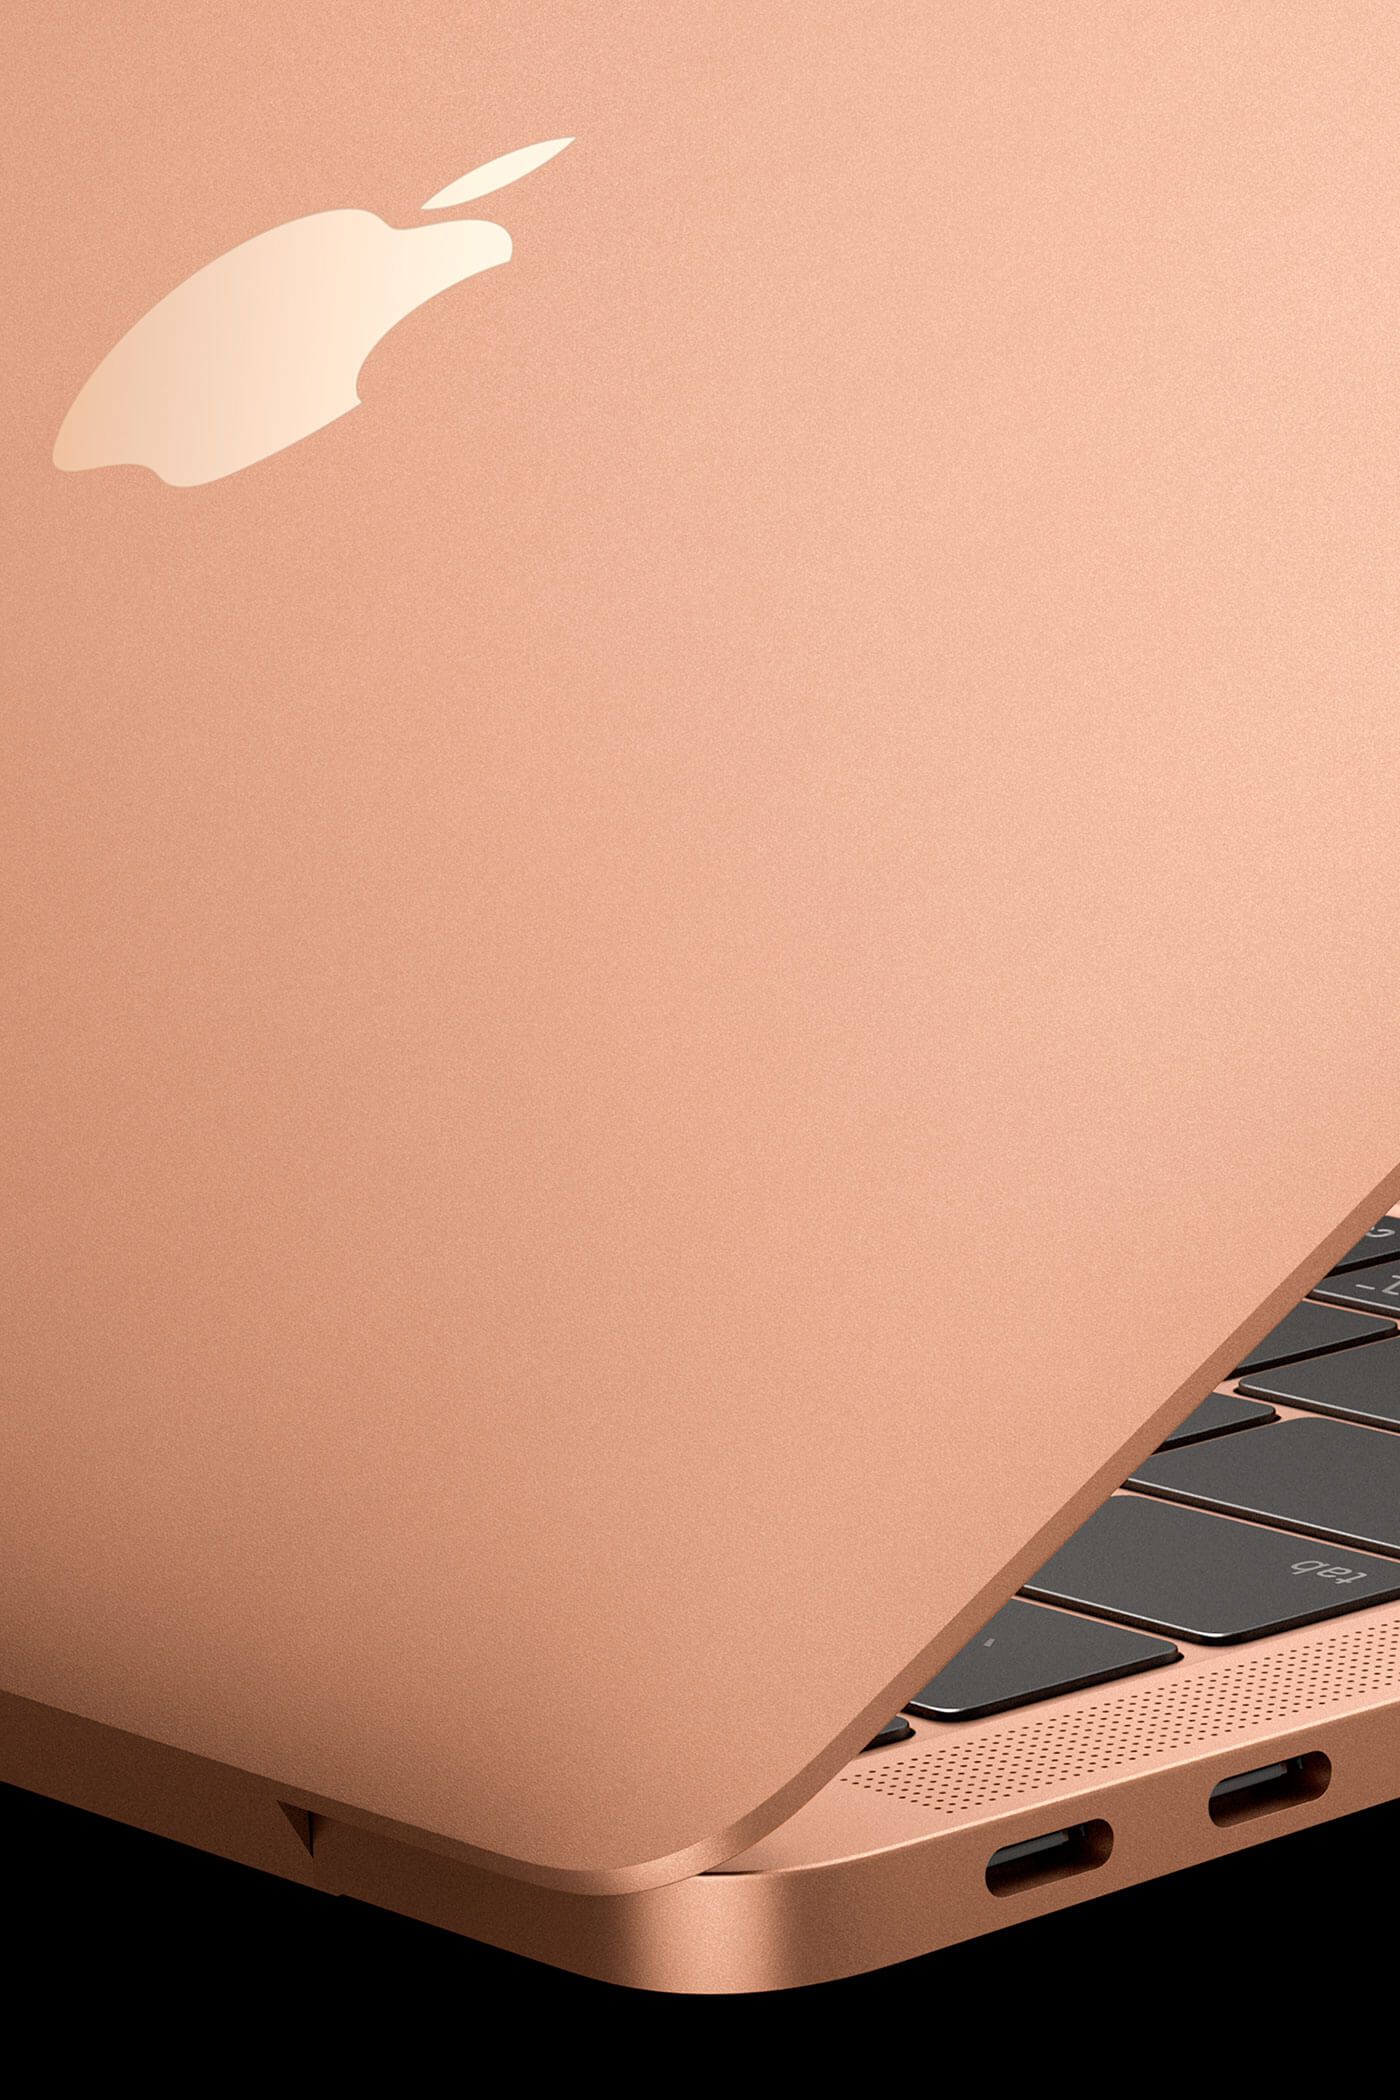 MacBook Air close up